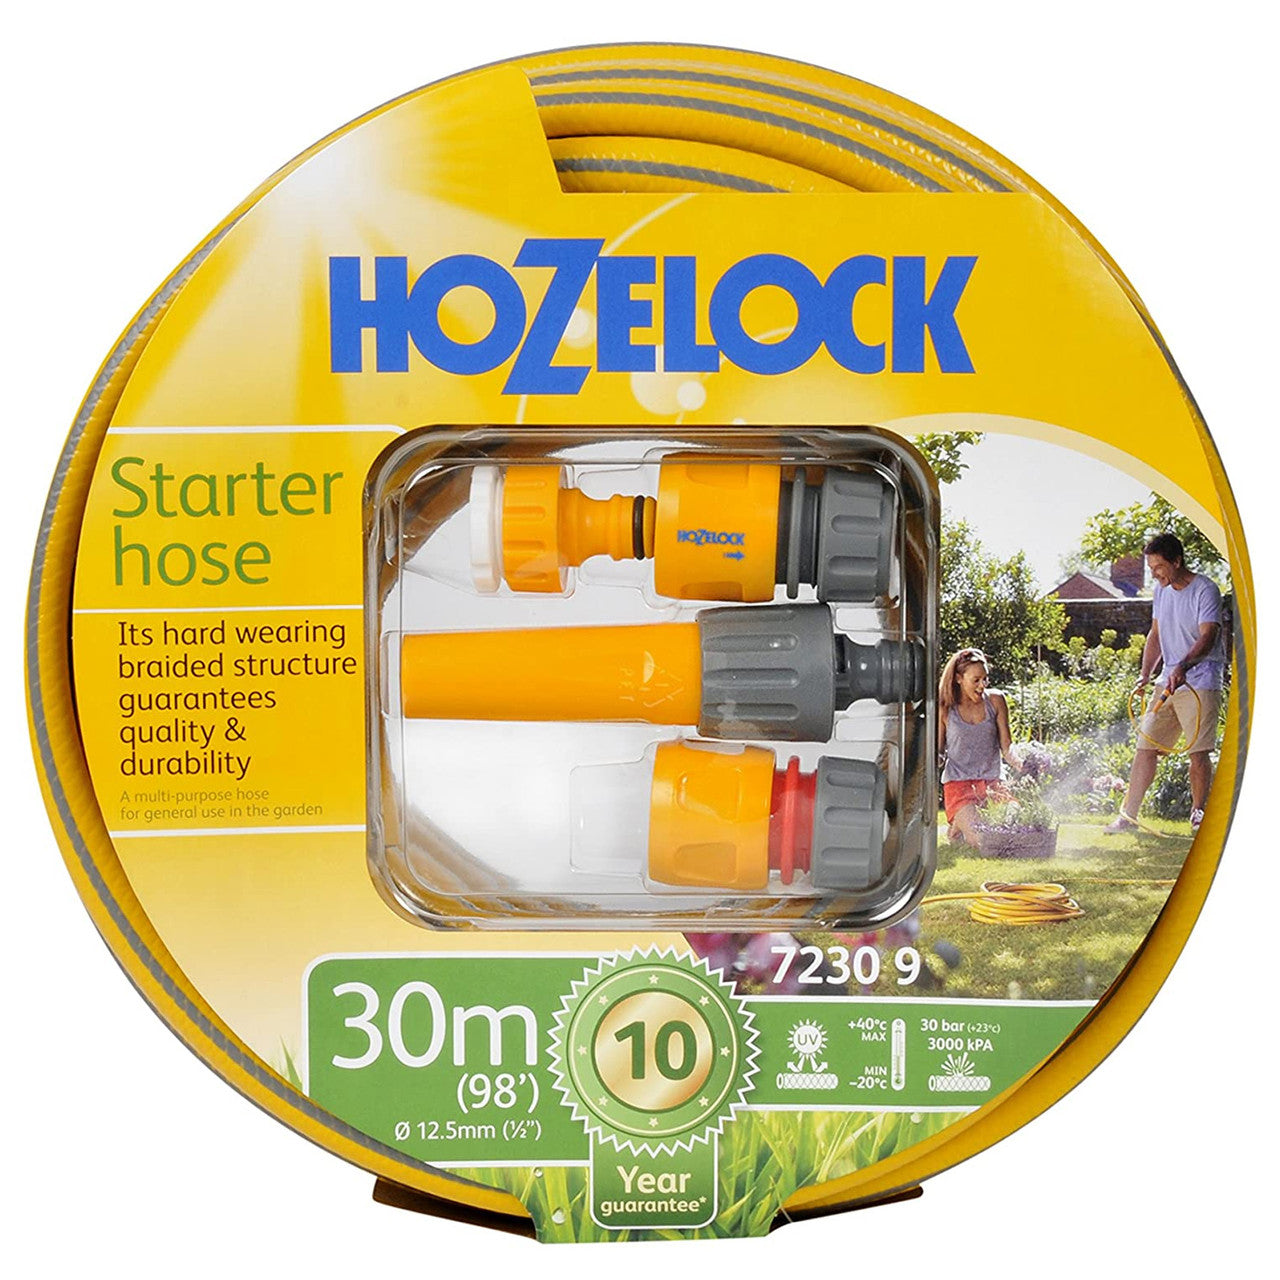 Hozelock 7230 9 Starter Hose & Fittings Set 12.5mm x 30 Metres